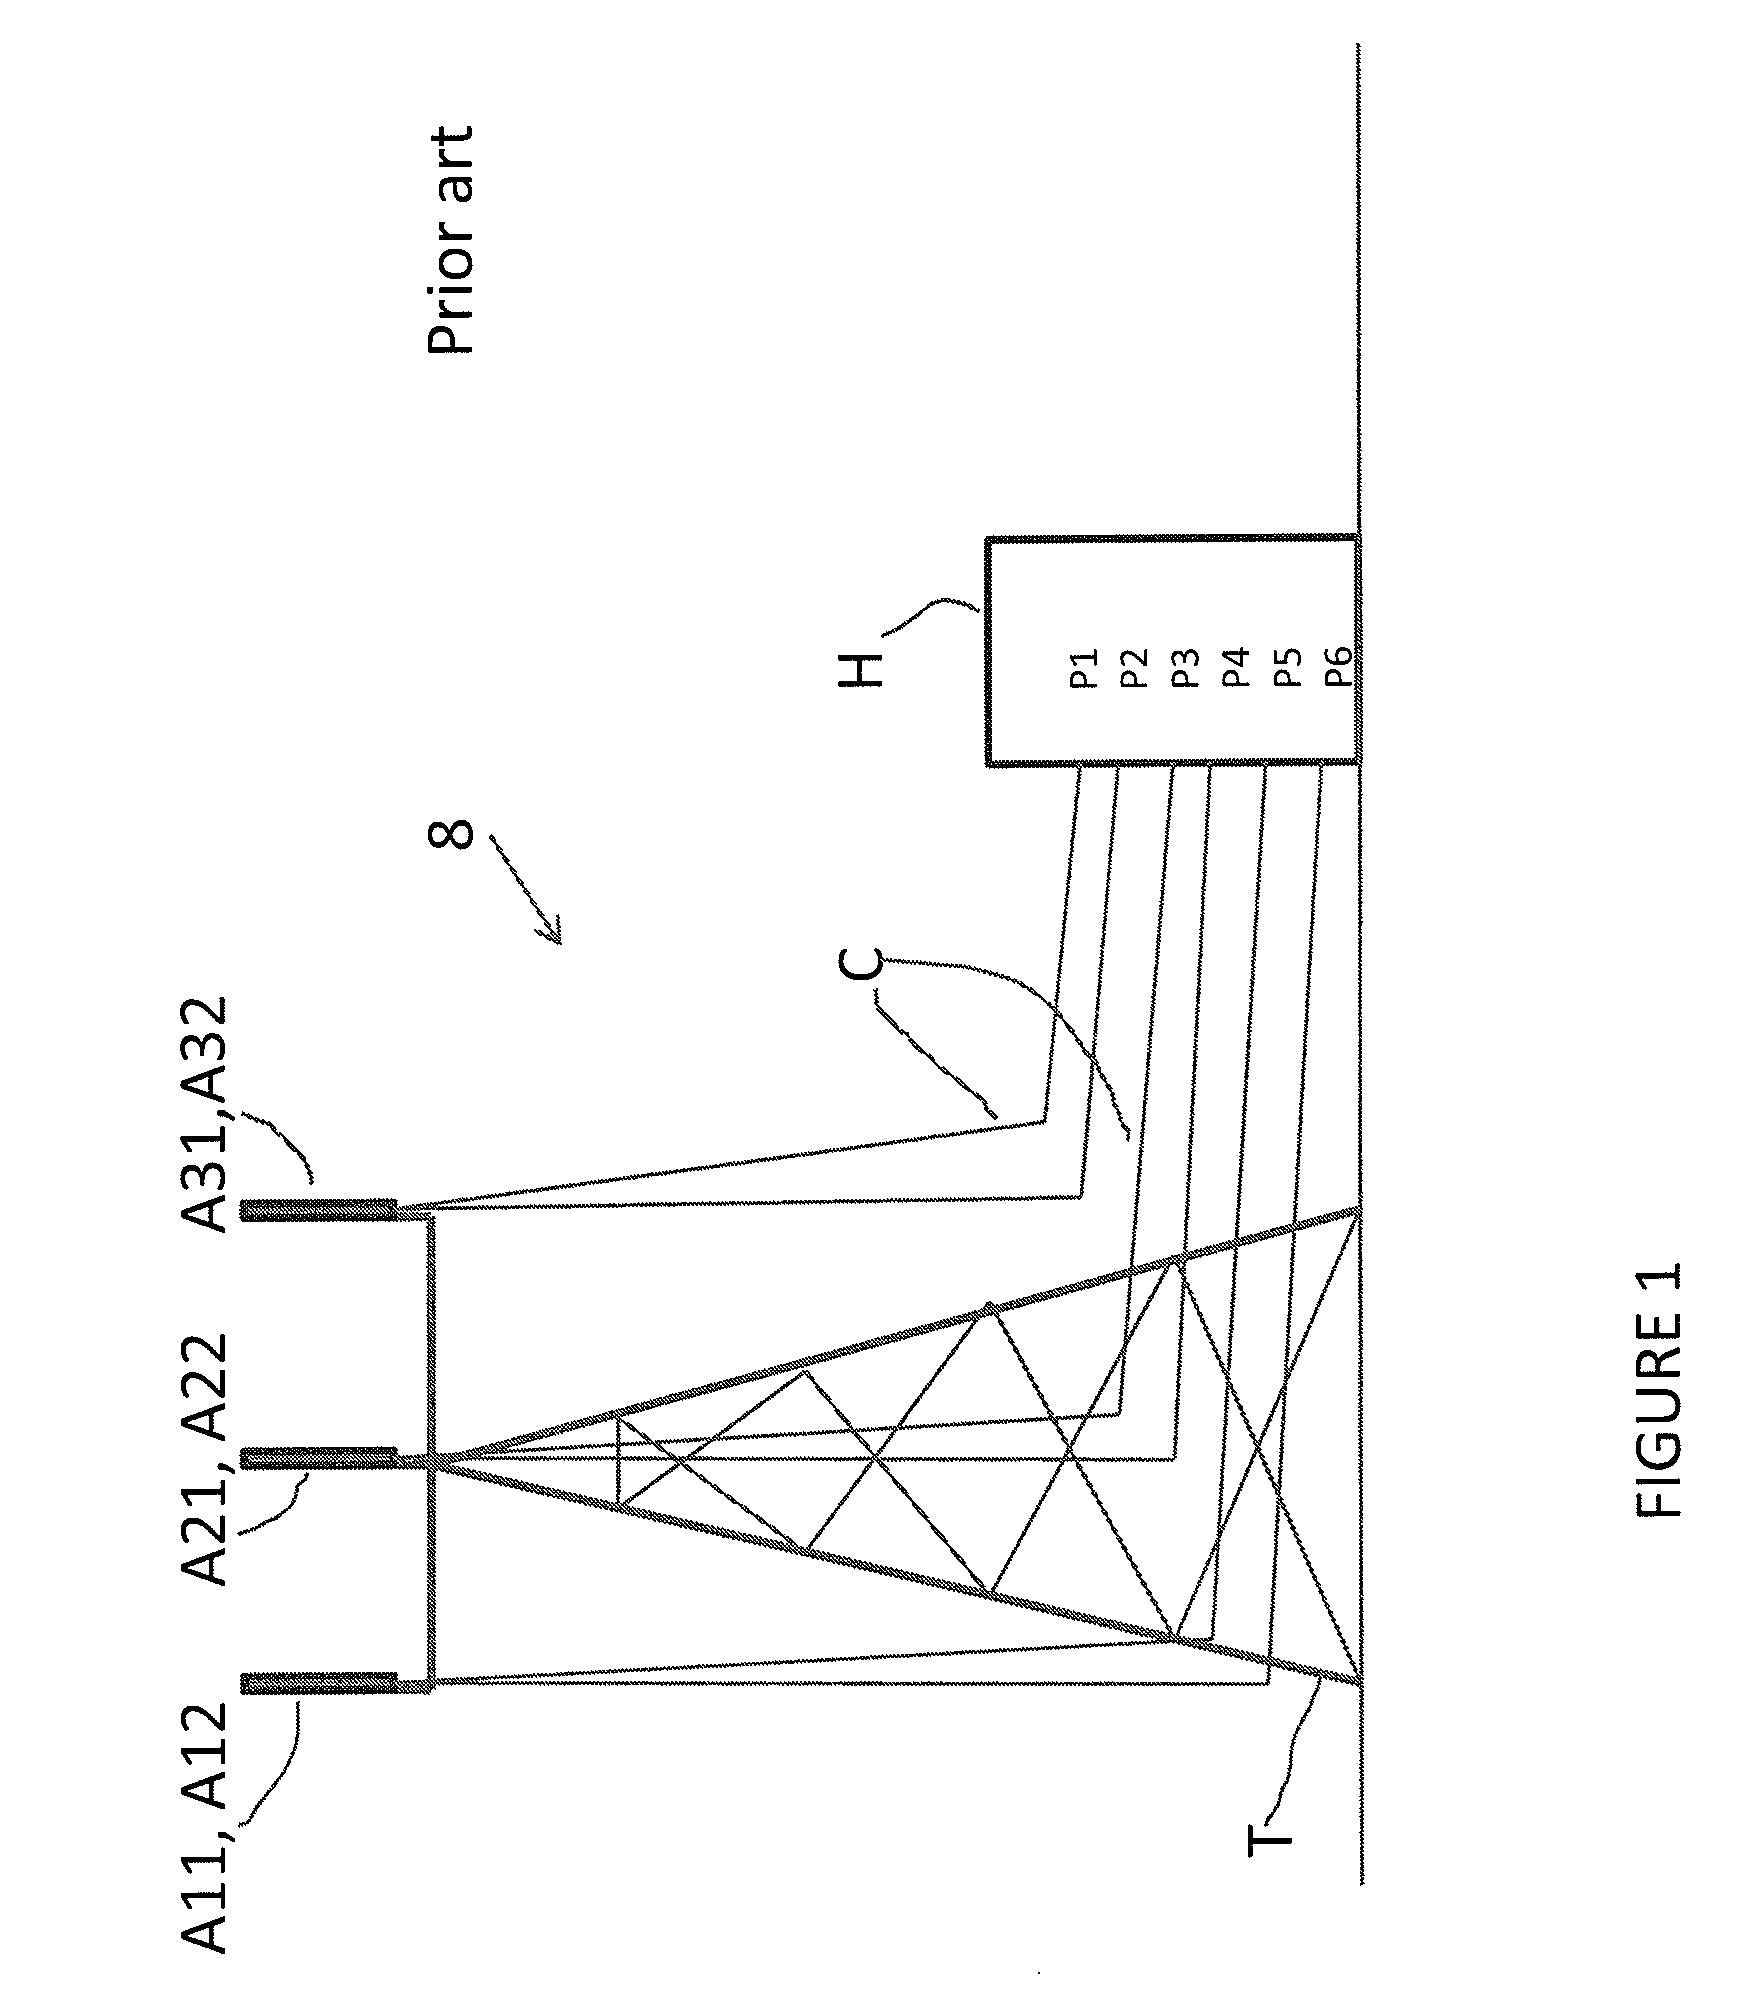 Antenna auto-configuration